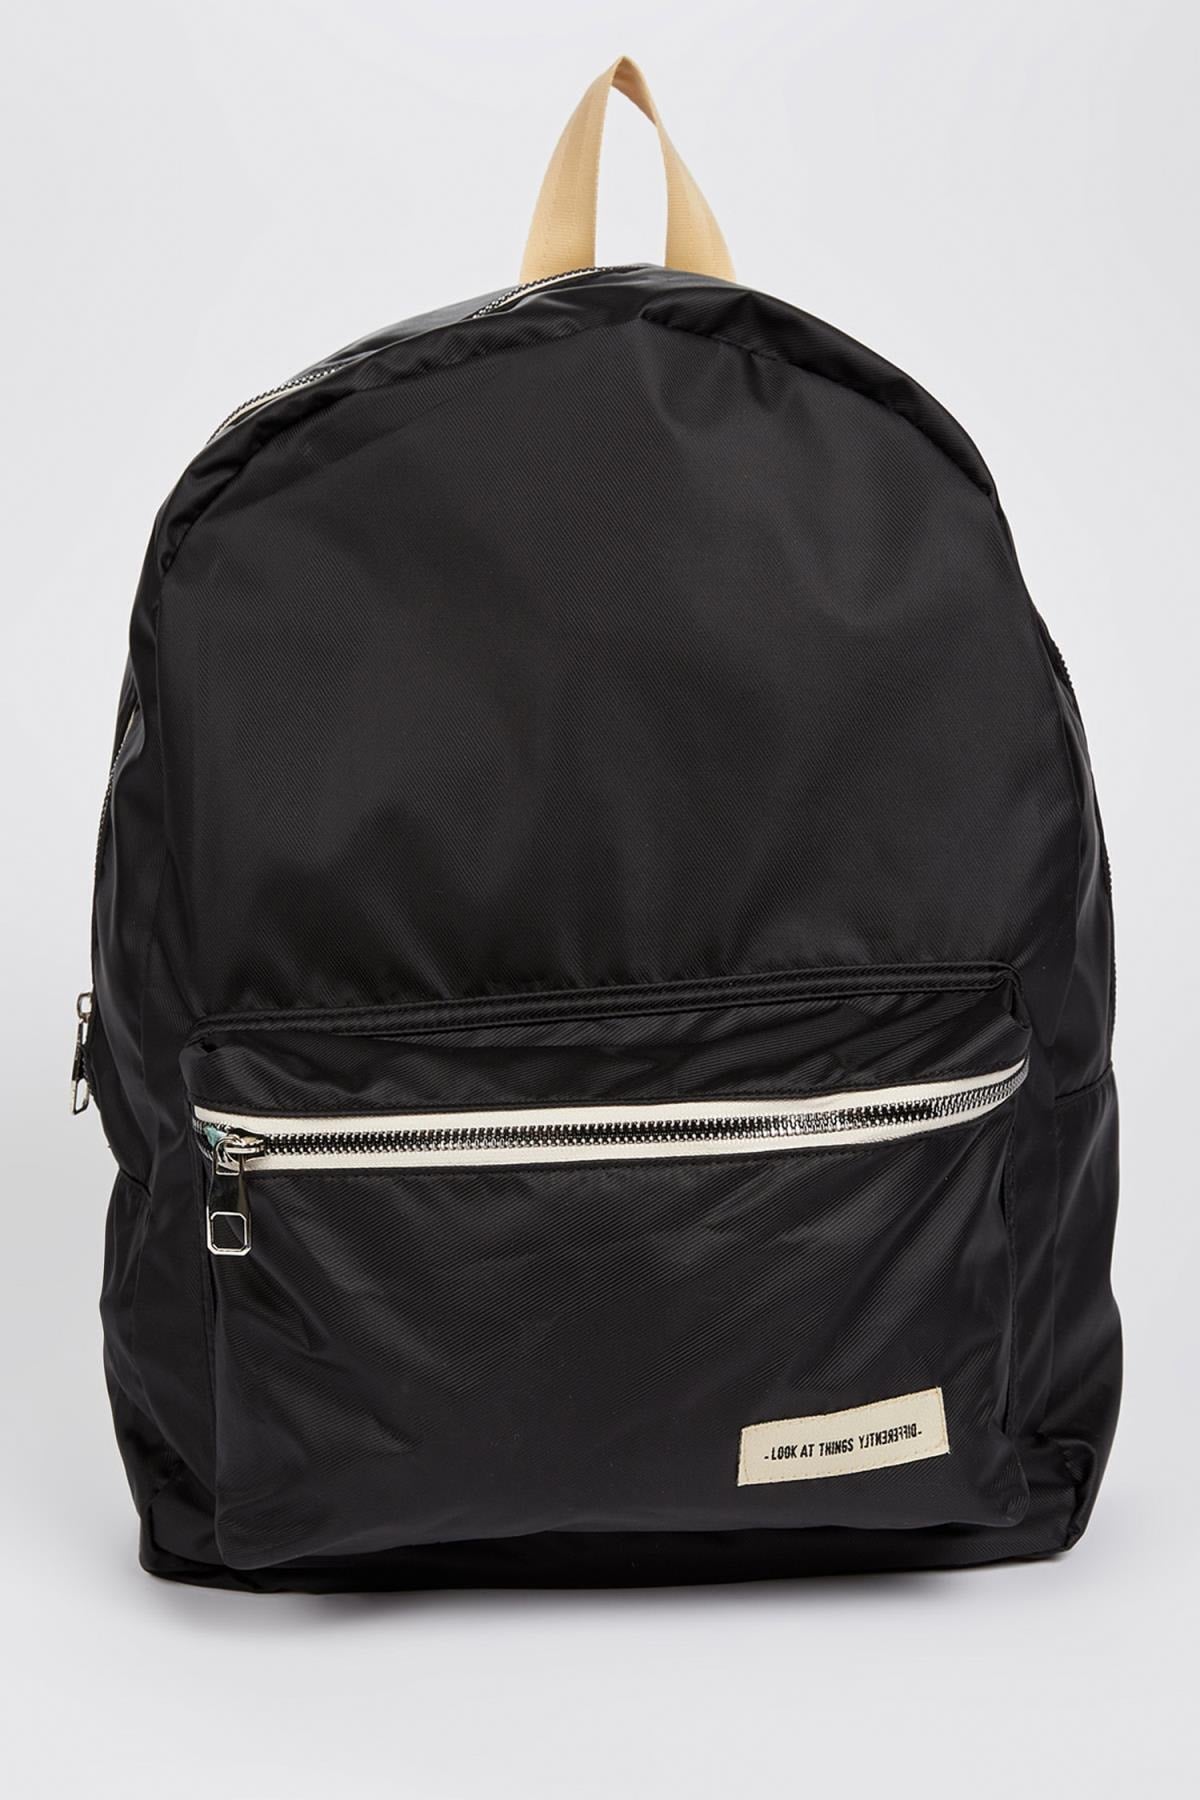 Unisex Fit School Backpack